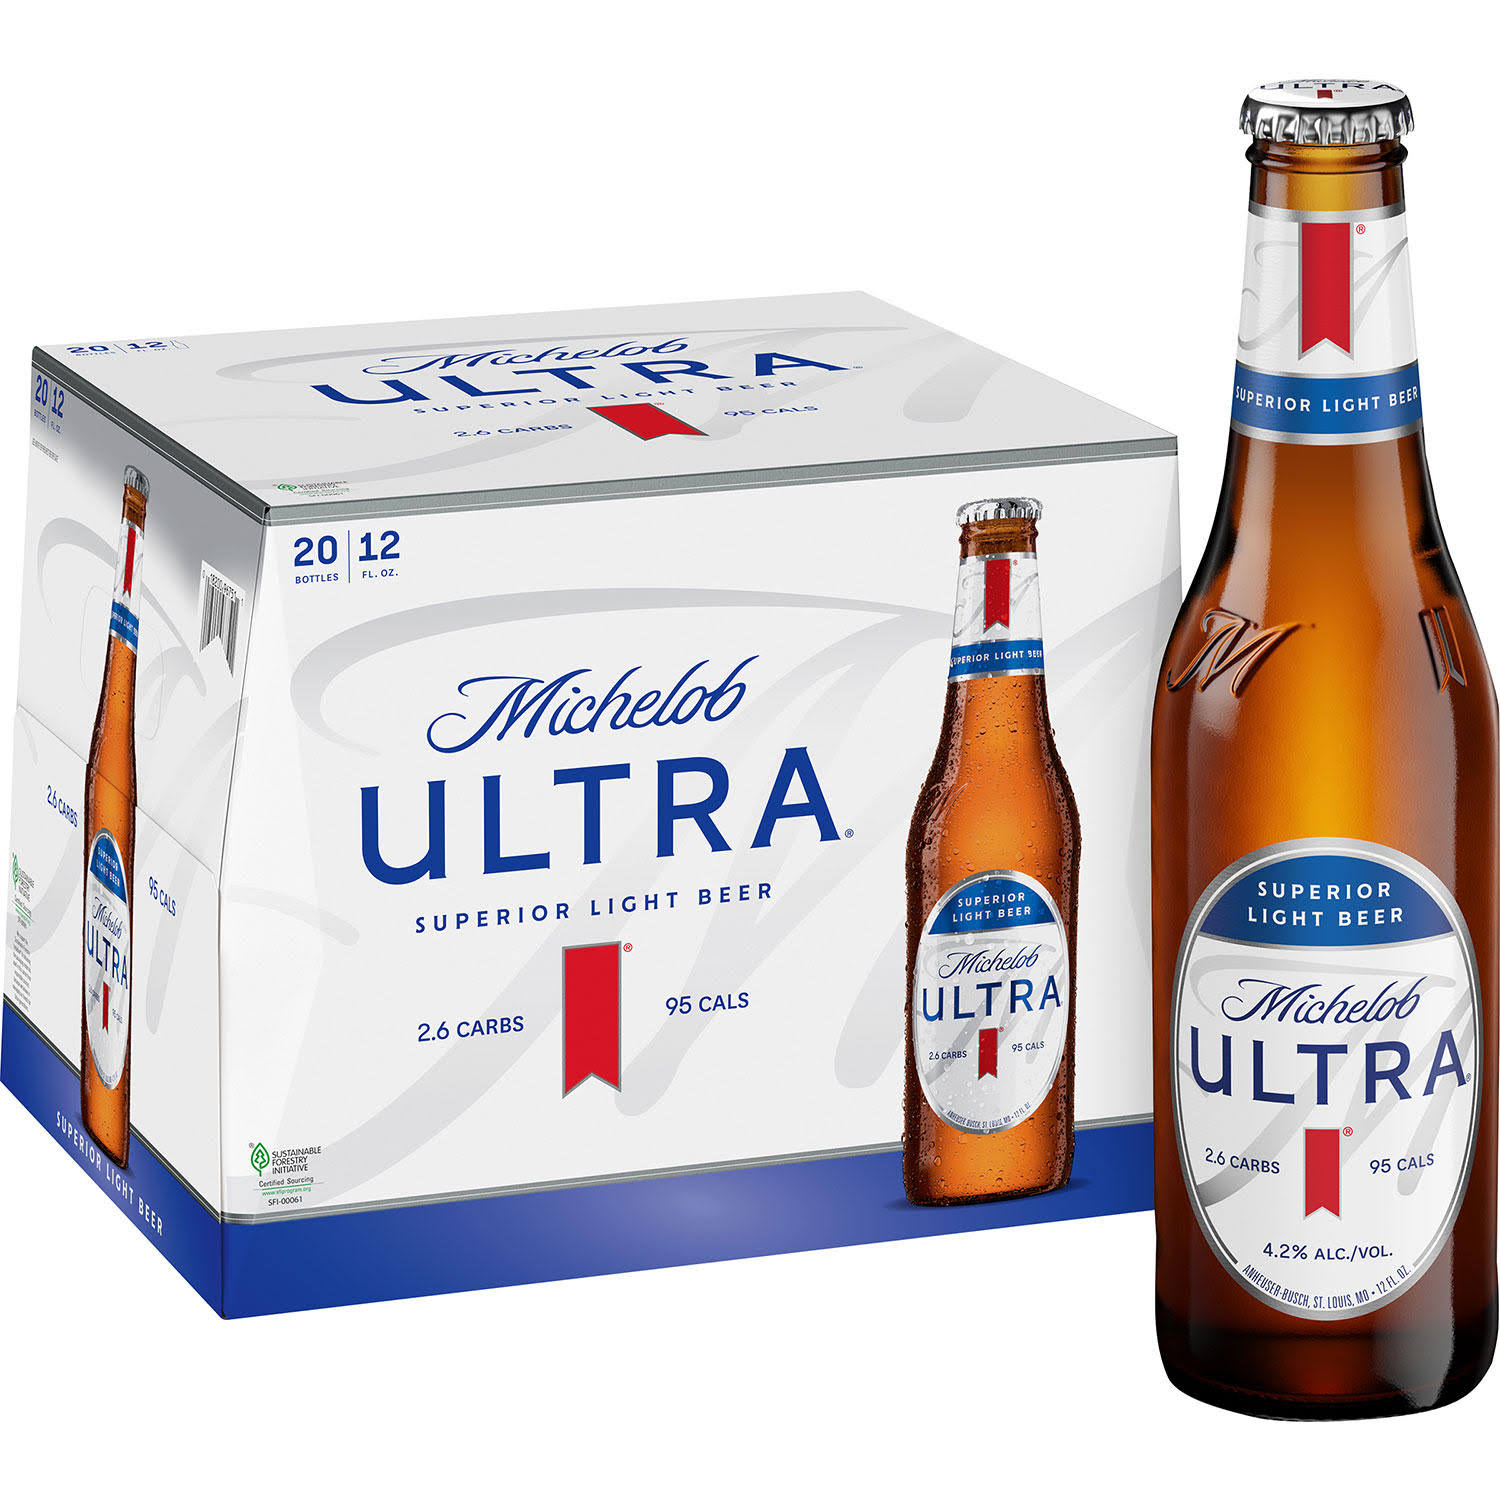 Michelob Ultra Beer - Superior Light, 20x12oz